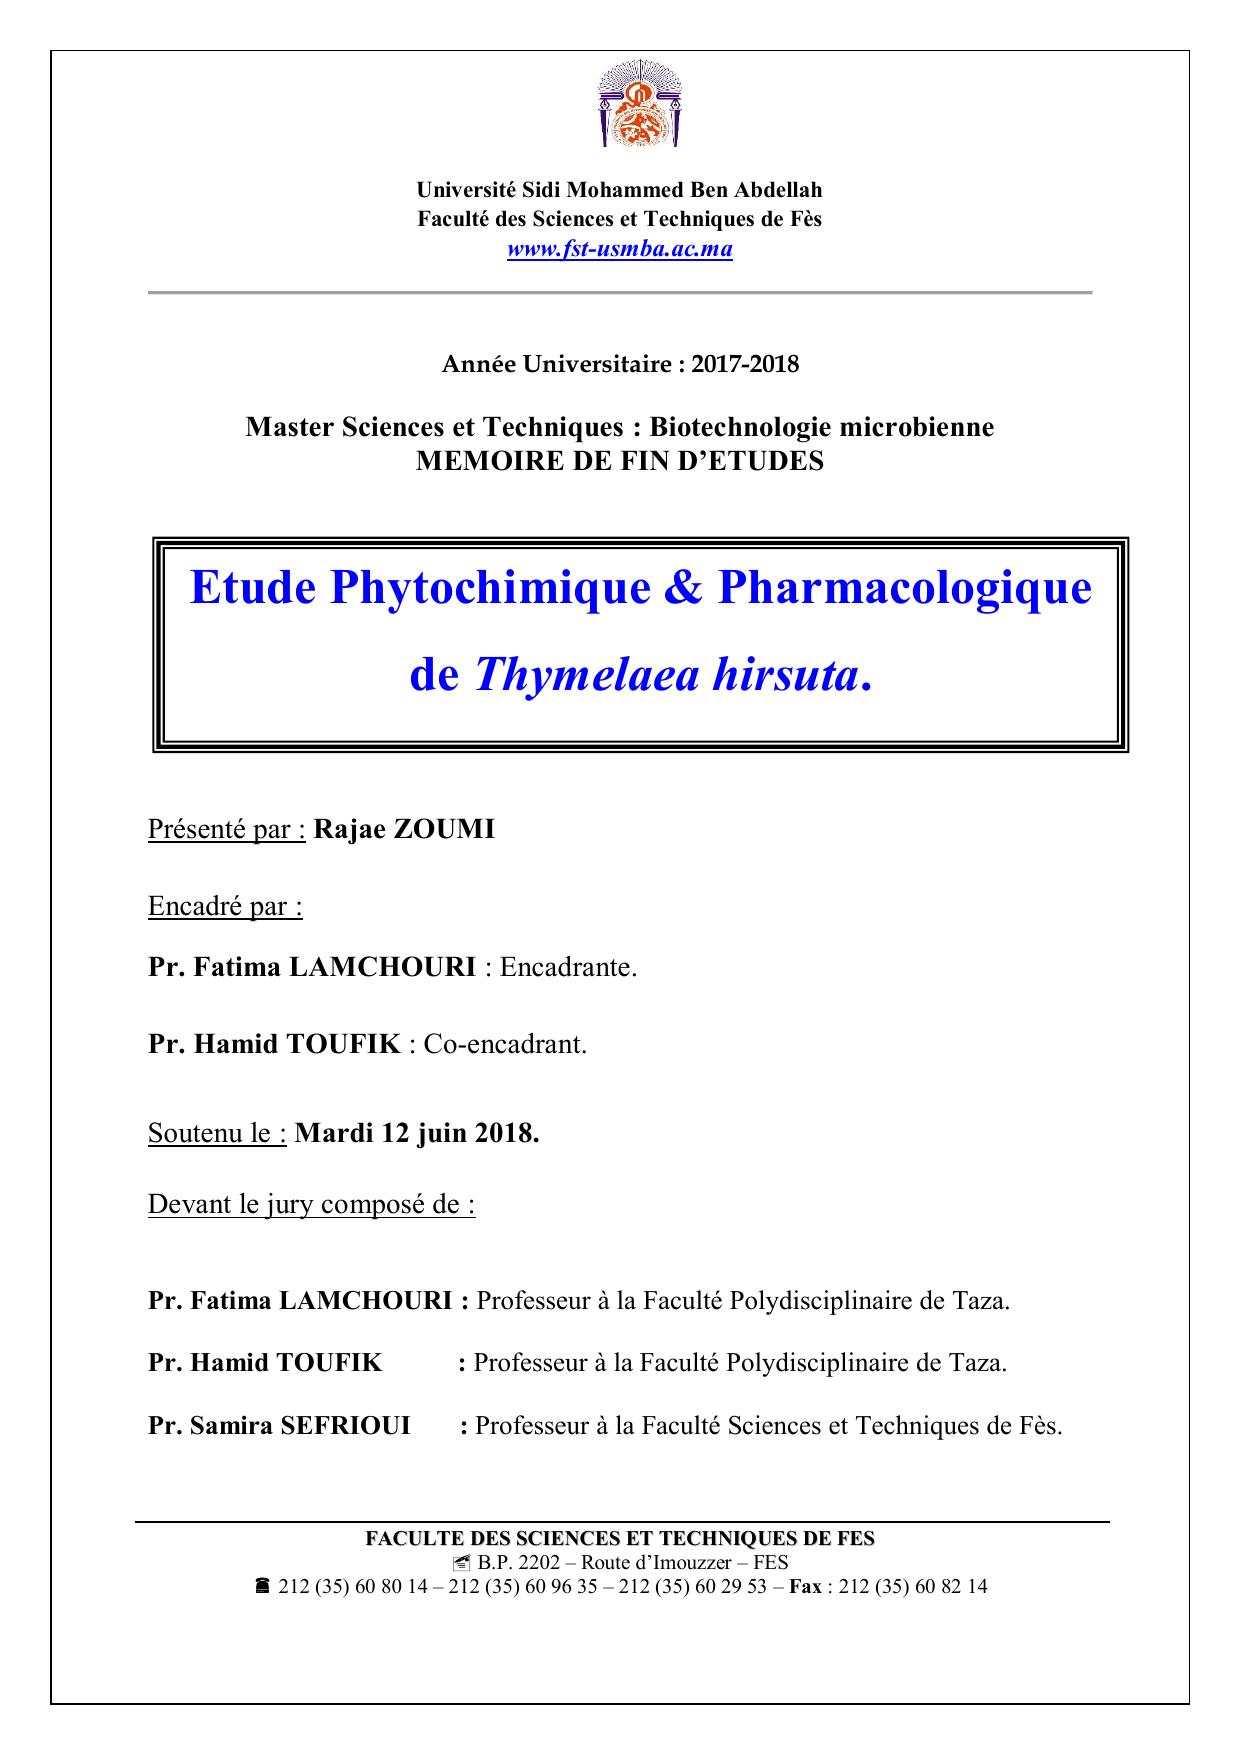 Etude Phytochimique & Pharmacologique de Thymelaea hirsuta